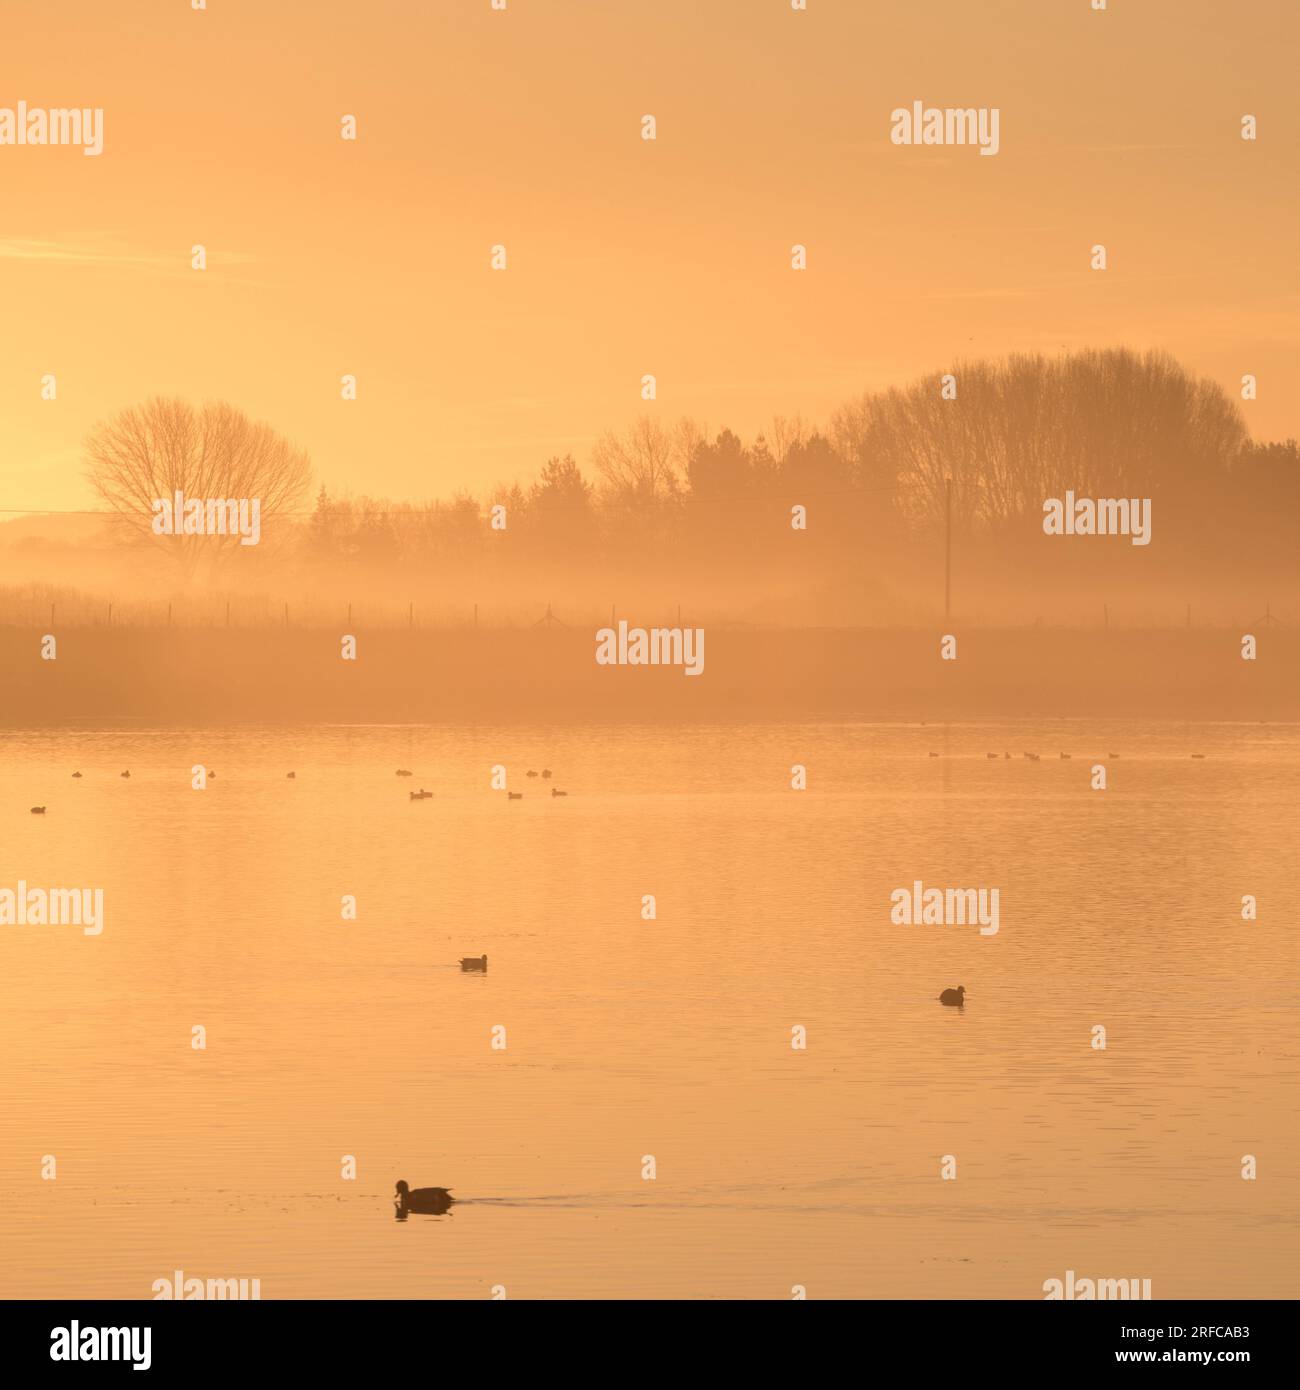 Misty sunrise at Dernford Reservoir Sawston, Cambridgeshire, UK Stock Photo